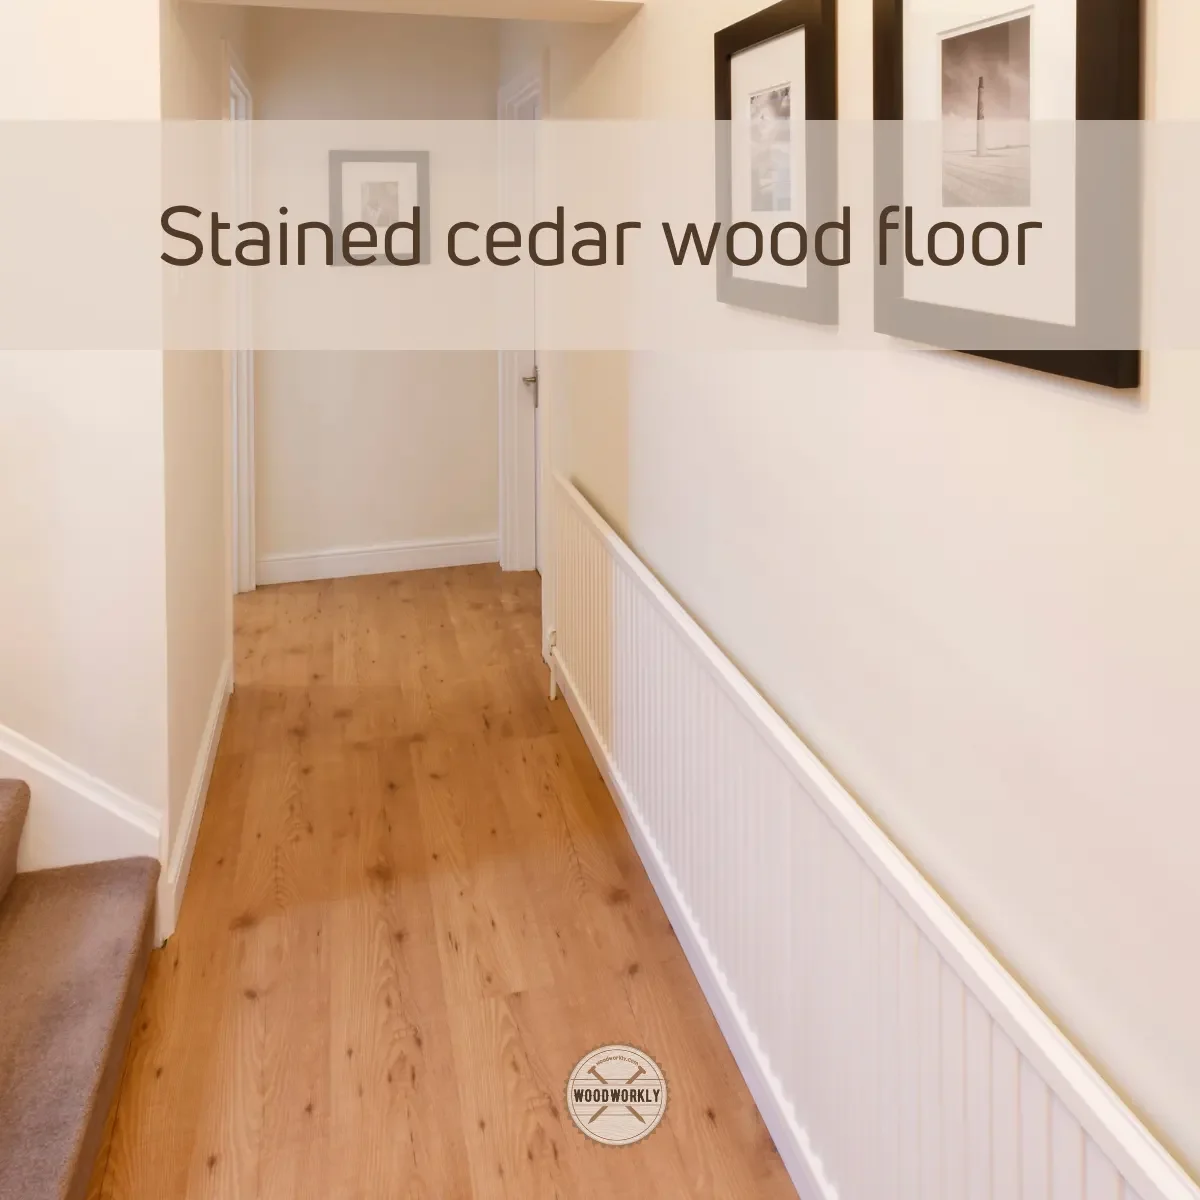 Stained cedar wood flooring